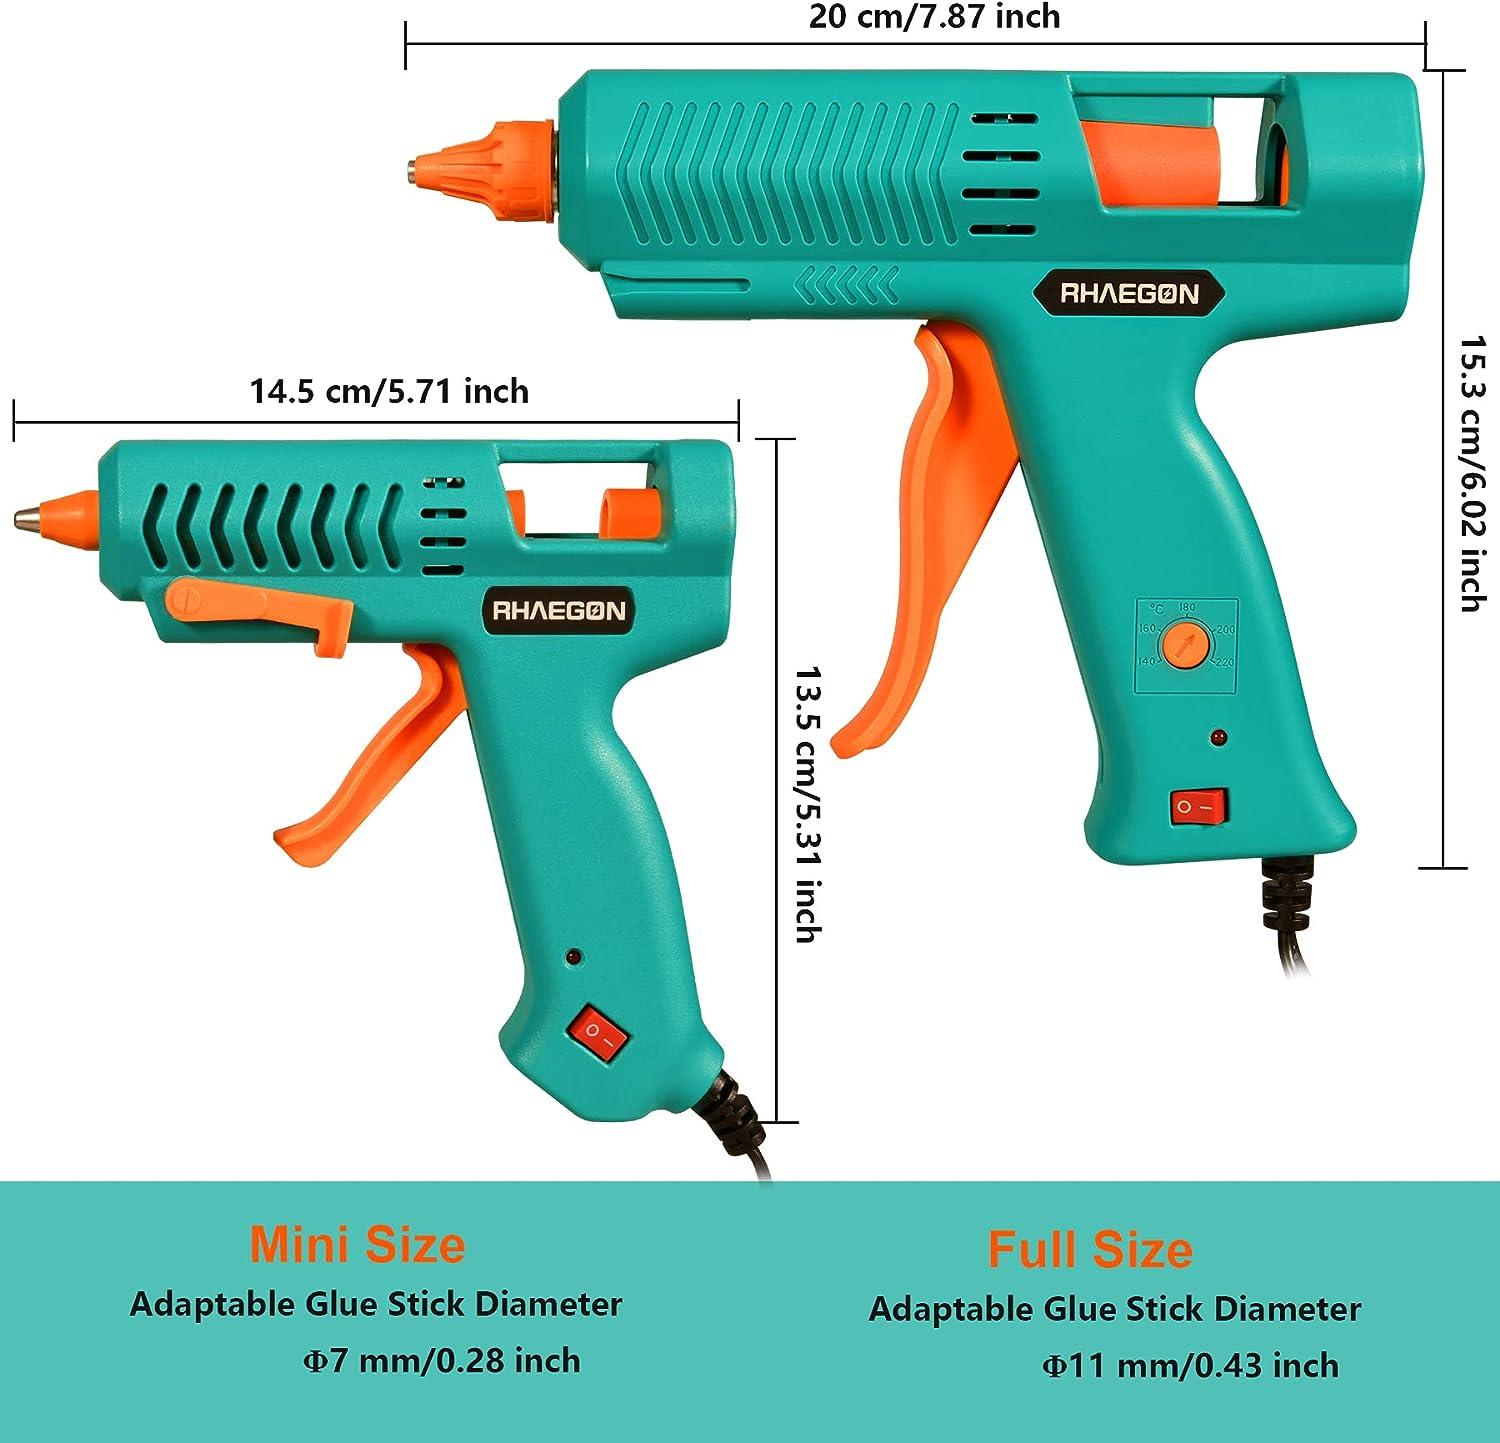 6 Pcs Mini Hot Glue-gun Compatible With Class Project, Small Glue-gun Craft  Safe